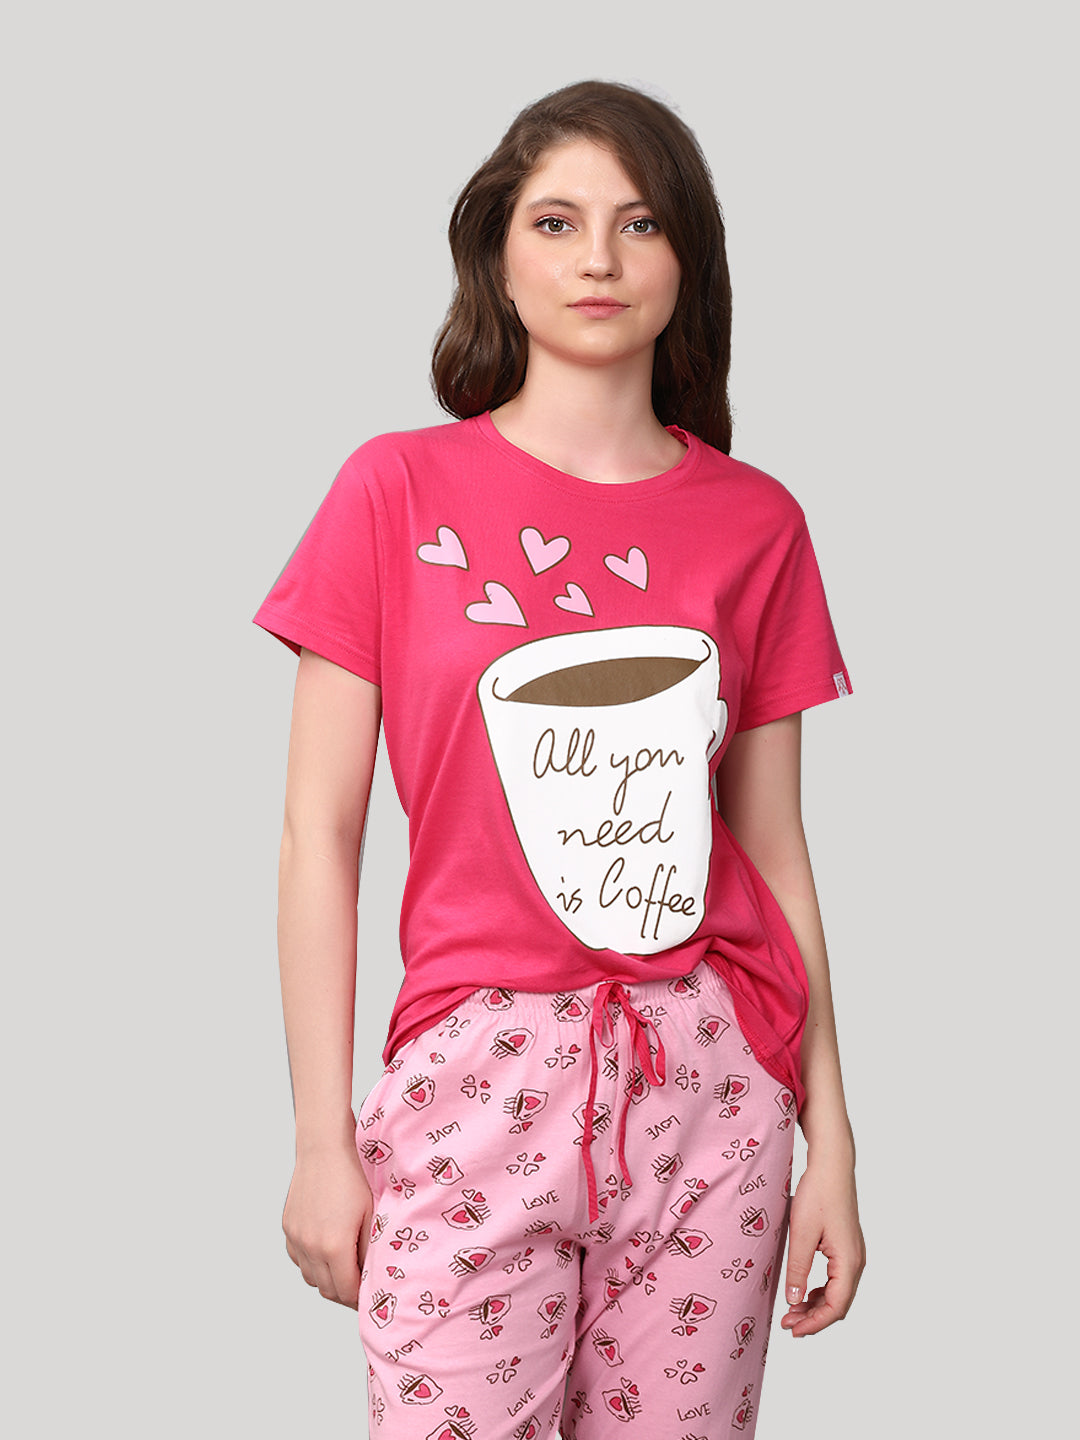 Pajama set Pink 100 % cotton